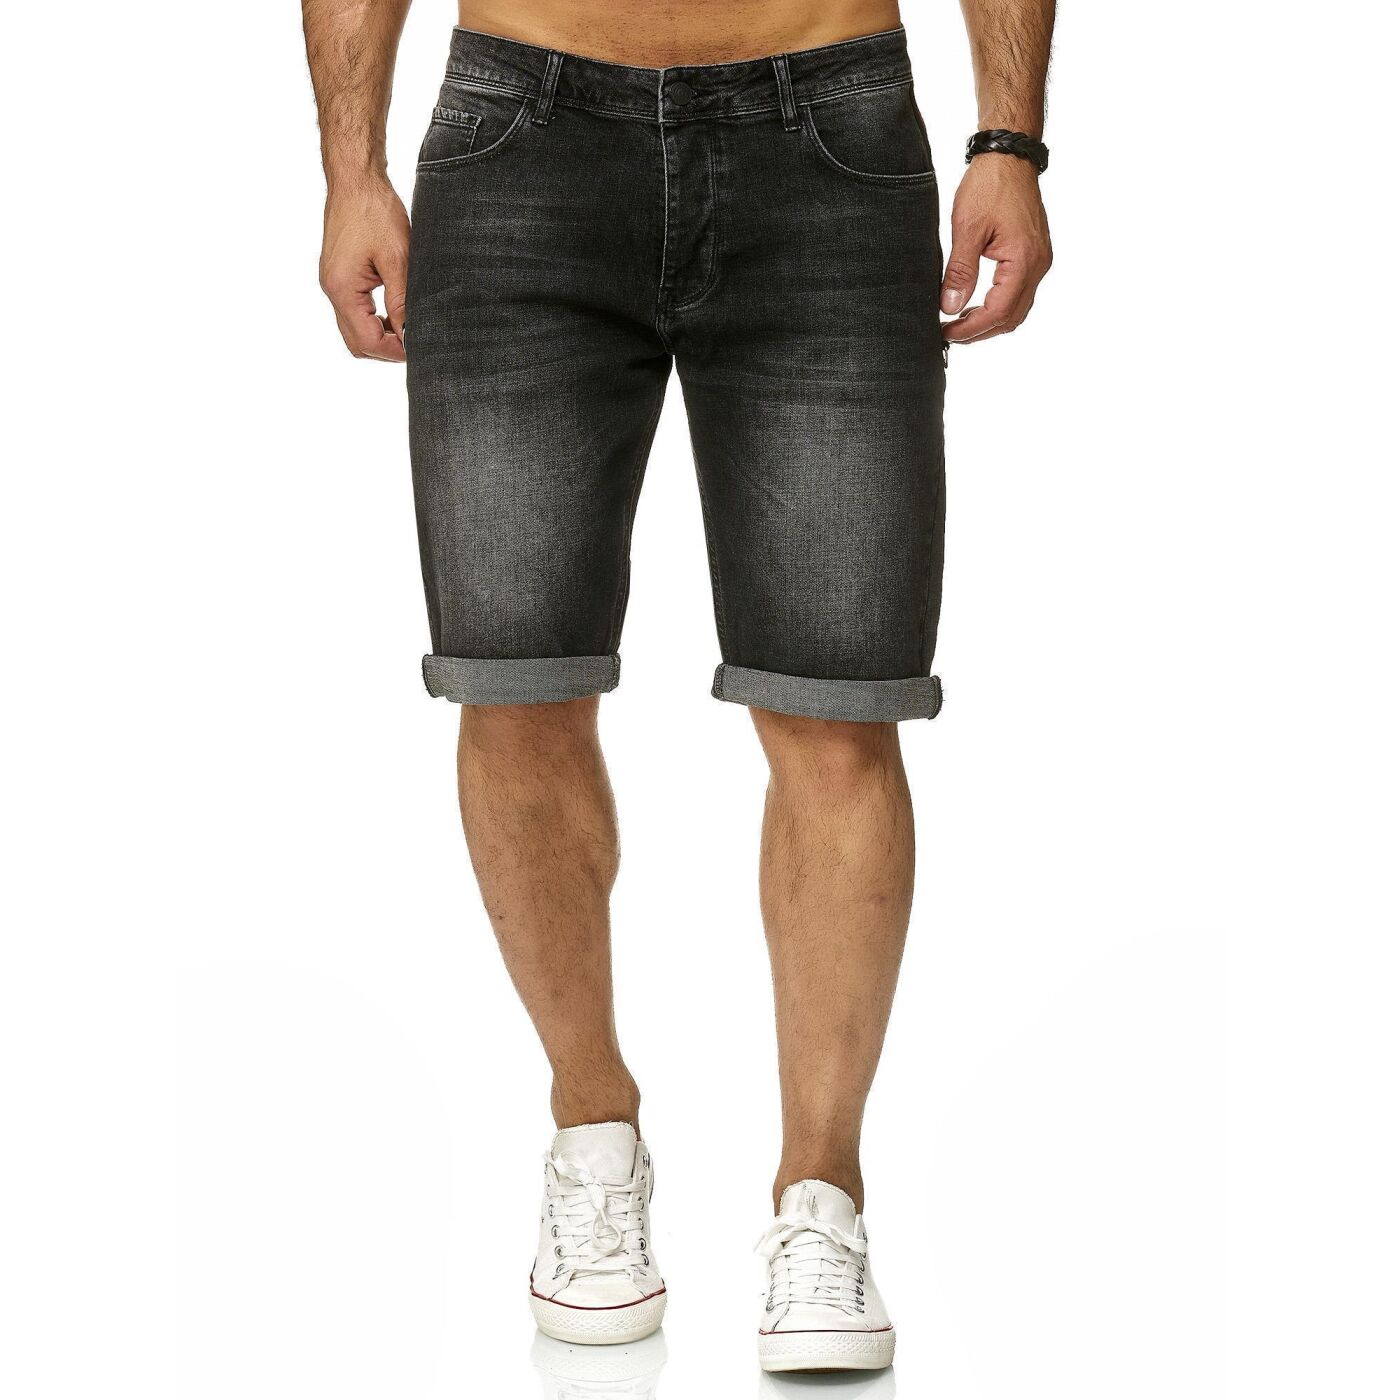 Denim Bridge Hose Stripe Capri Herren M48, Shorts Side Kurze Red 39,90 € Jeans